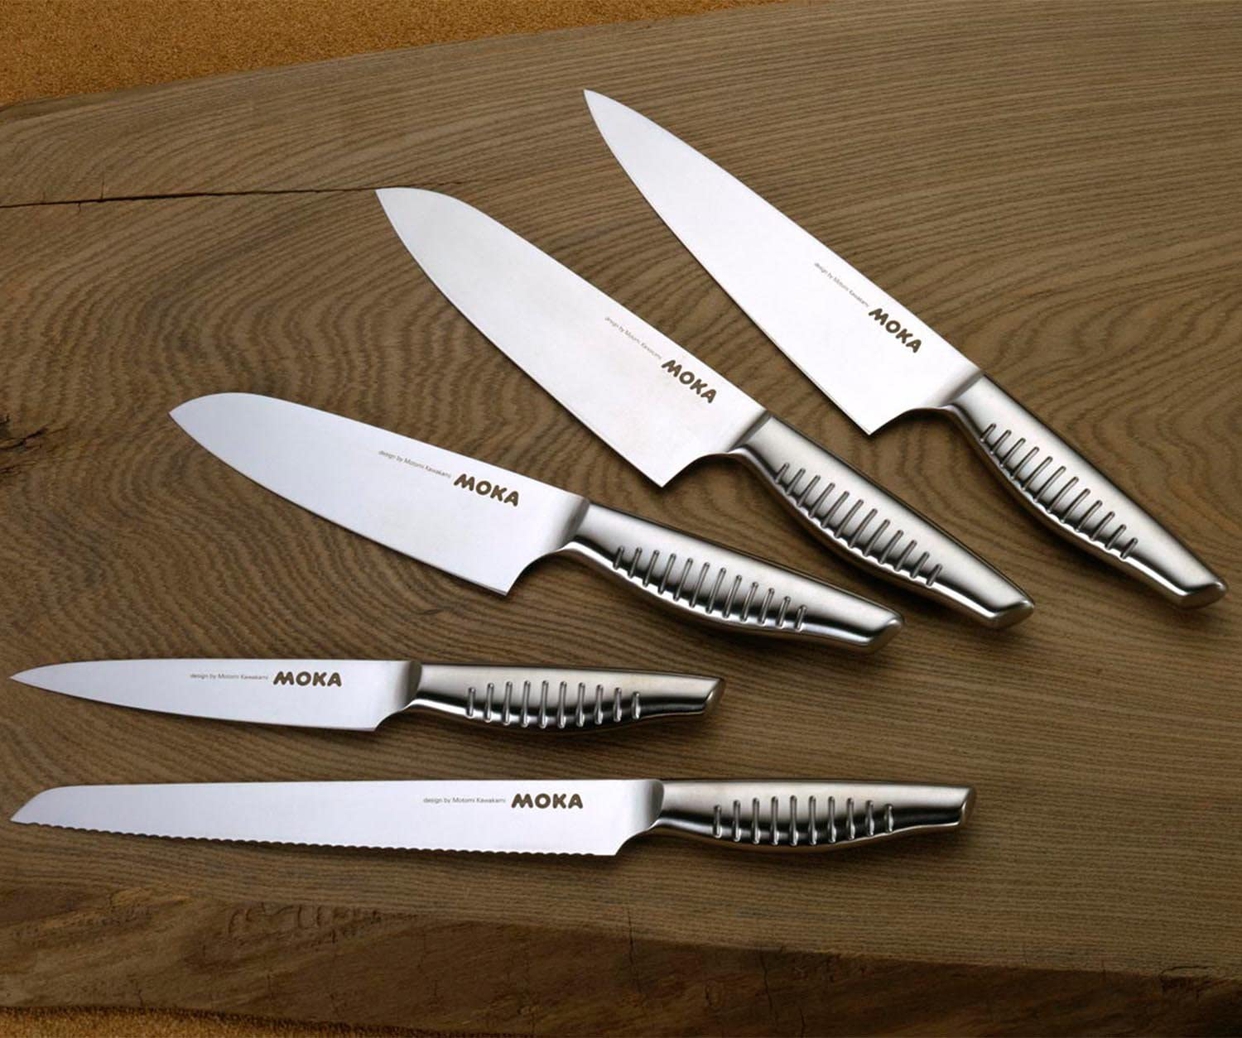 MOKA(モカ) パン切りナイフ 59001の商品画像2 